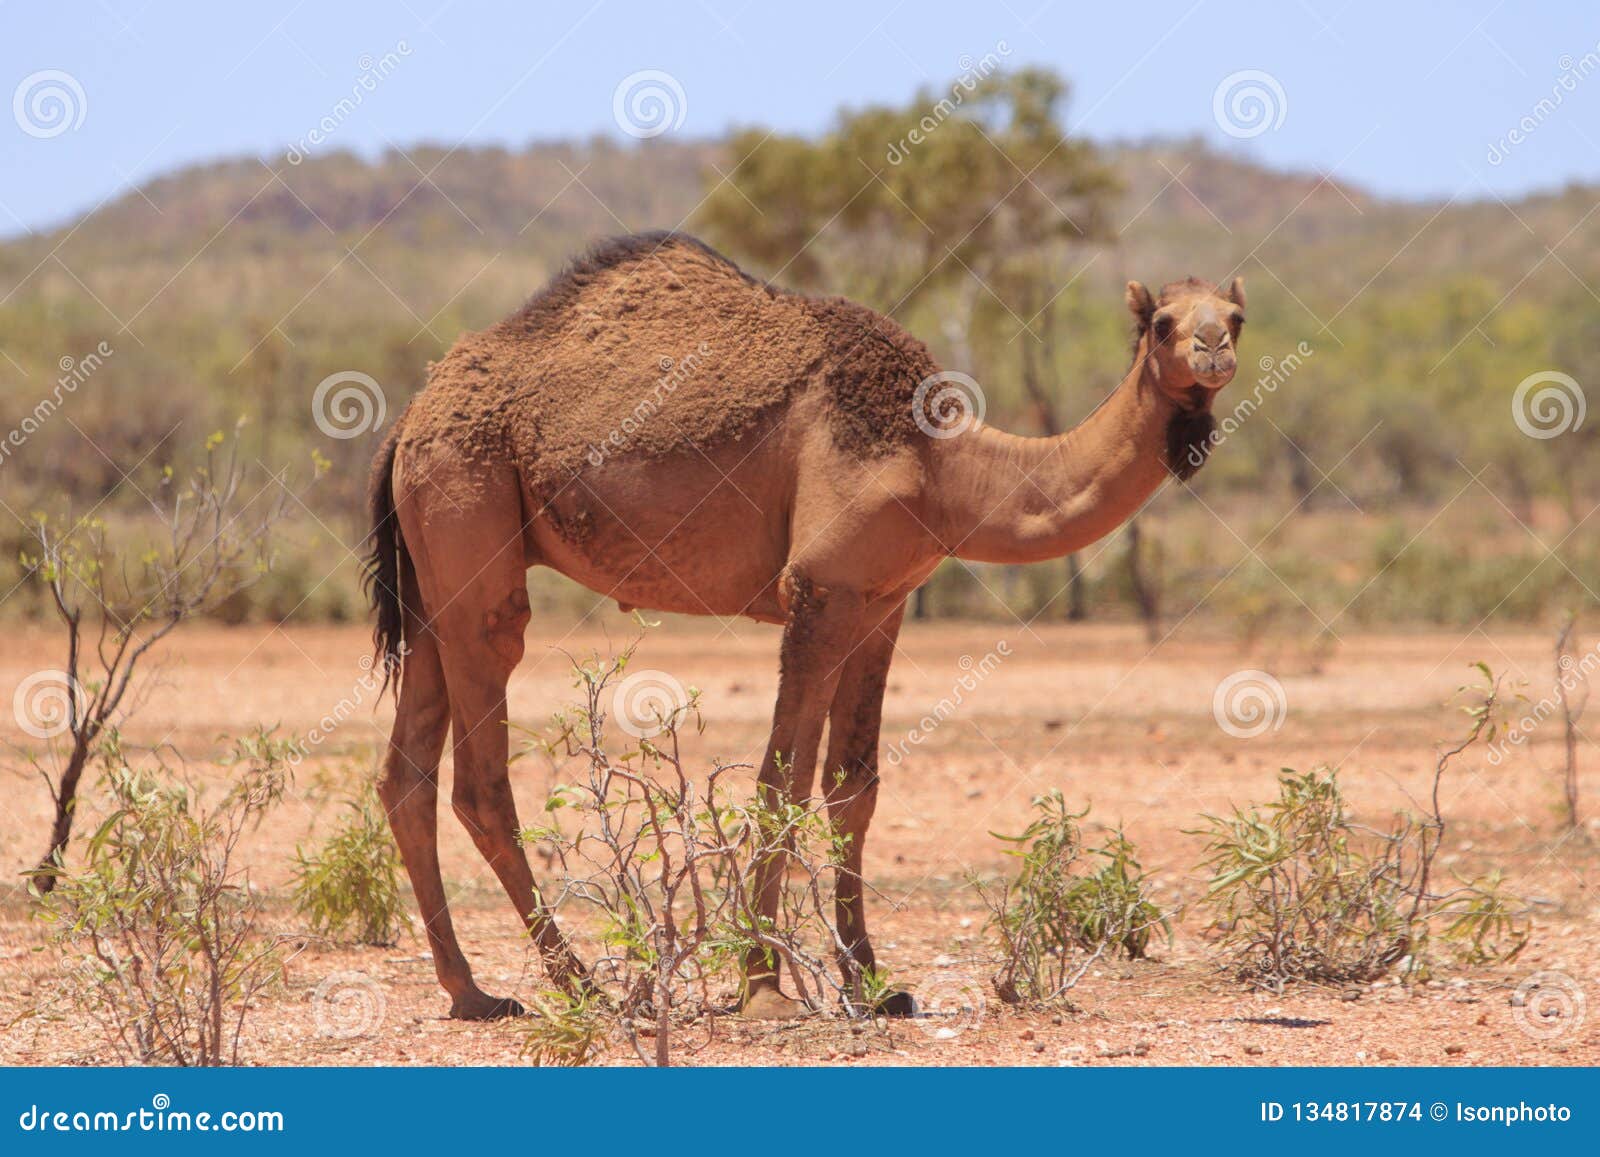 Plante træer progressiv farmaceut Feral Camel in Arid Australia Stock Photo - Image of fauna, feed: 134817874